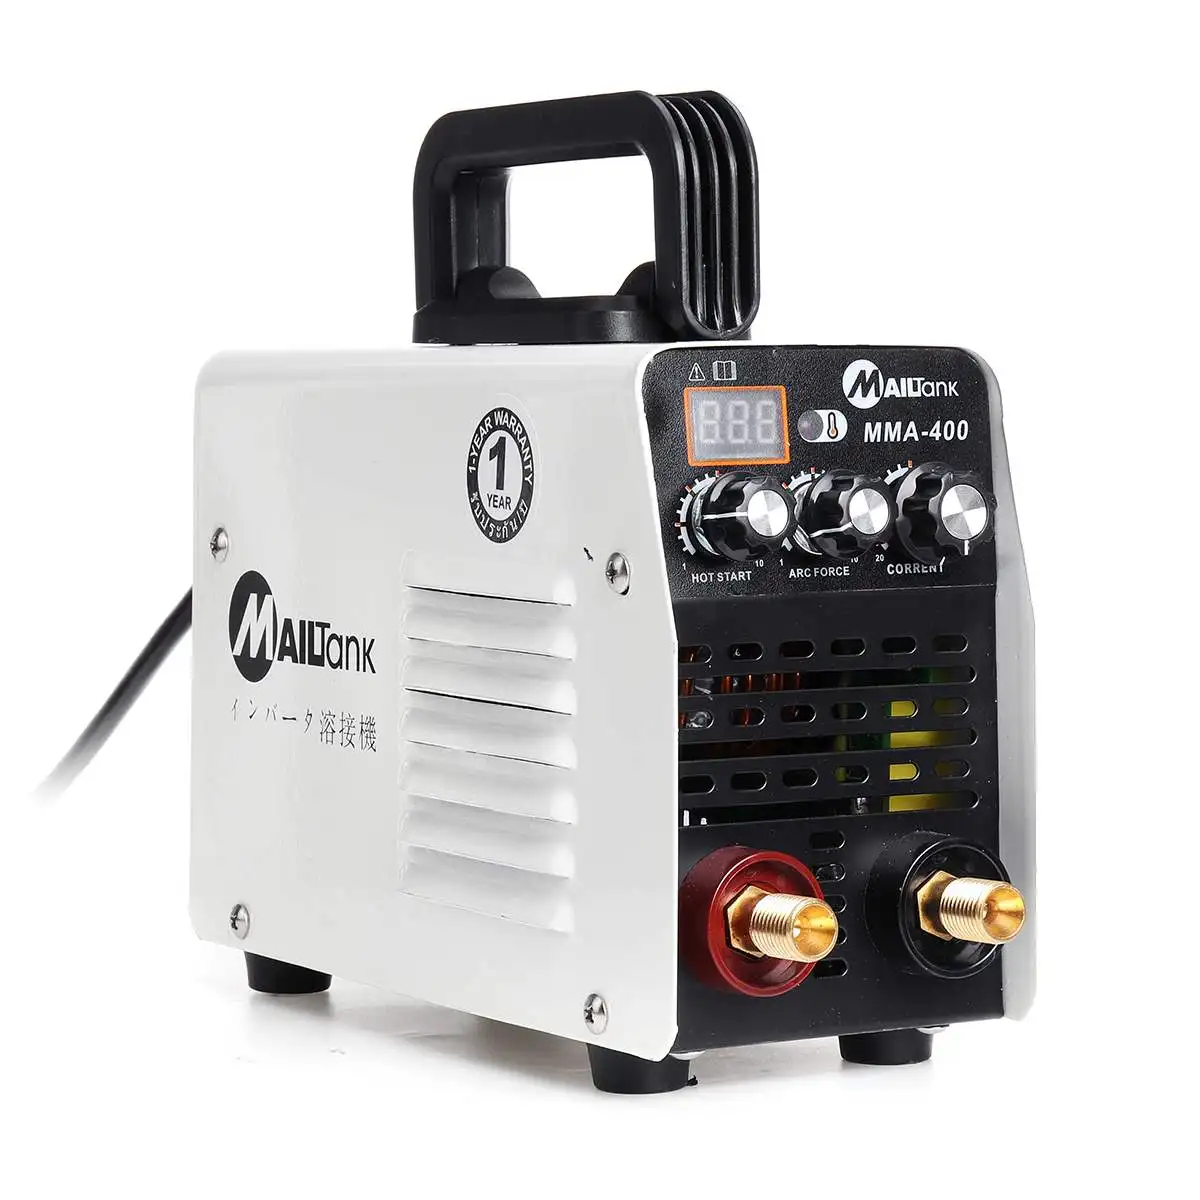 Mini 220V 400A Inverter Hot Start MMA Arc Welder Welding Machine Tools for Welding Working Electric Working w/ Accessories